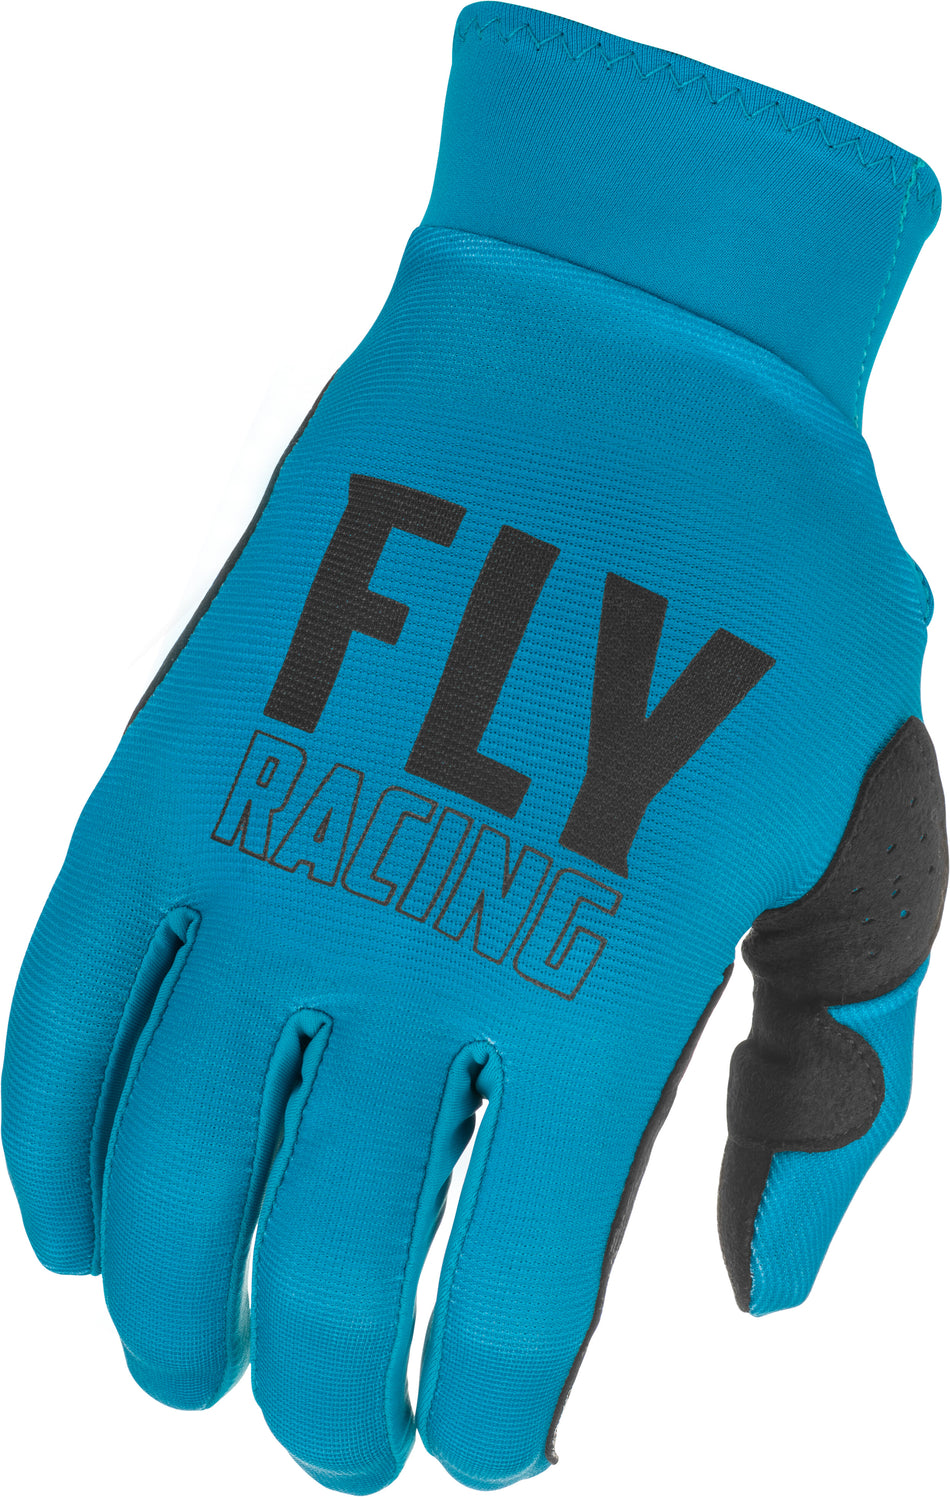 FLY RACING Pro Lite Gloves Blue/Black Sz 10 374-85110